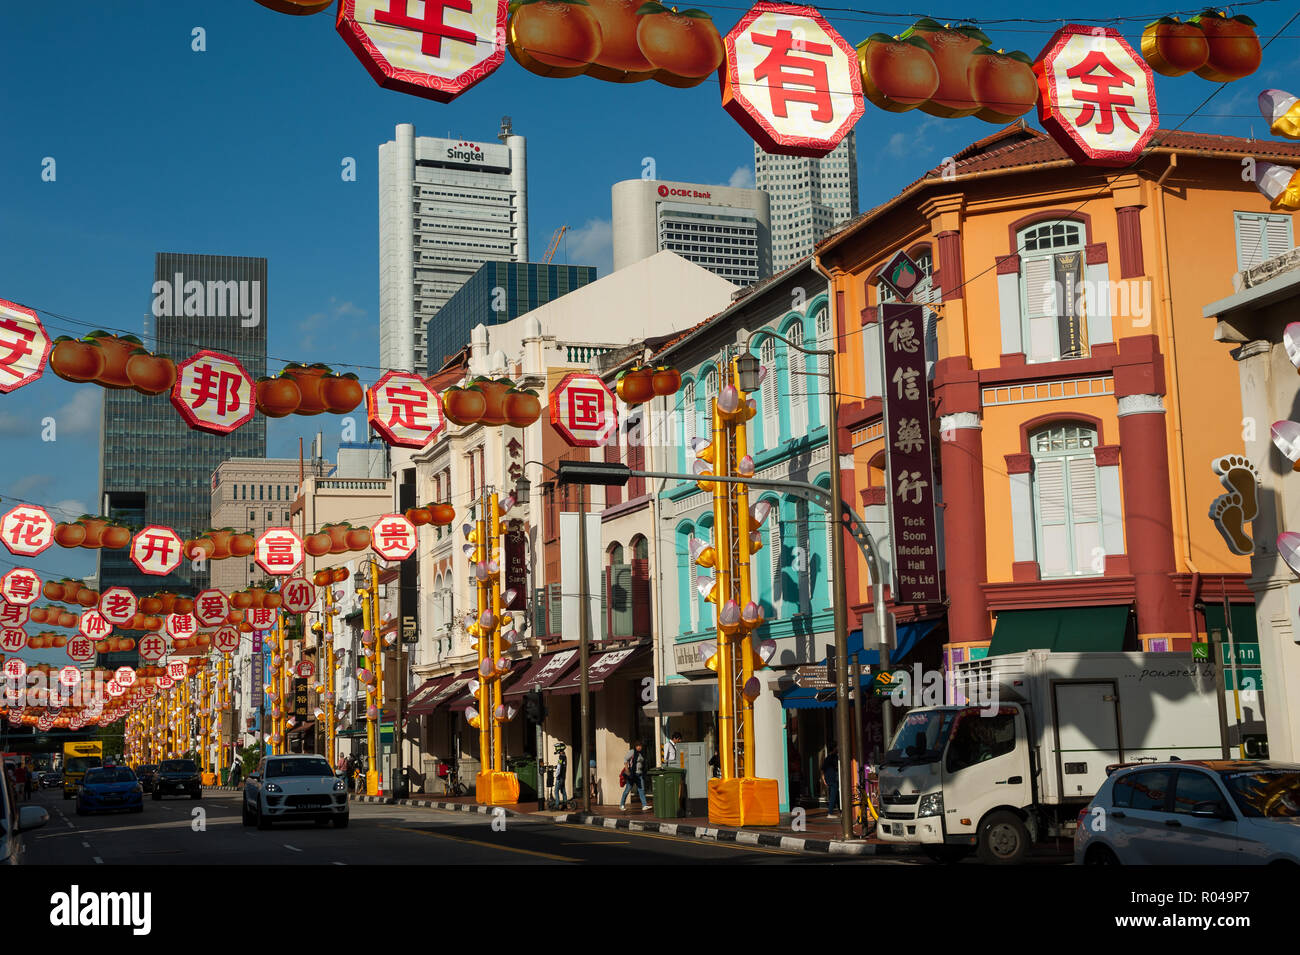 Singapore, Republic of Singapore, Colorful street scene in Chinatown Stock Photo